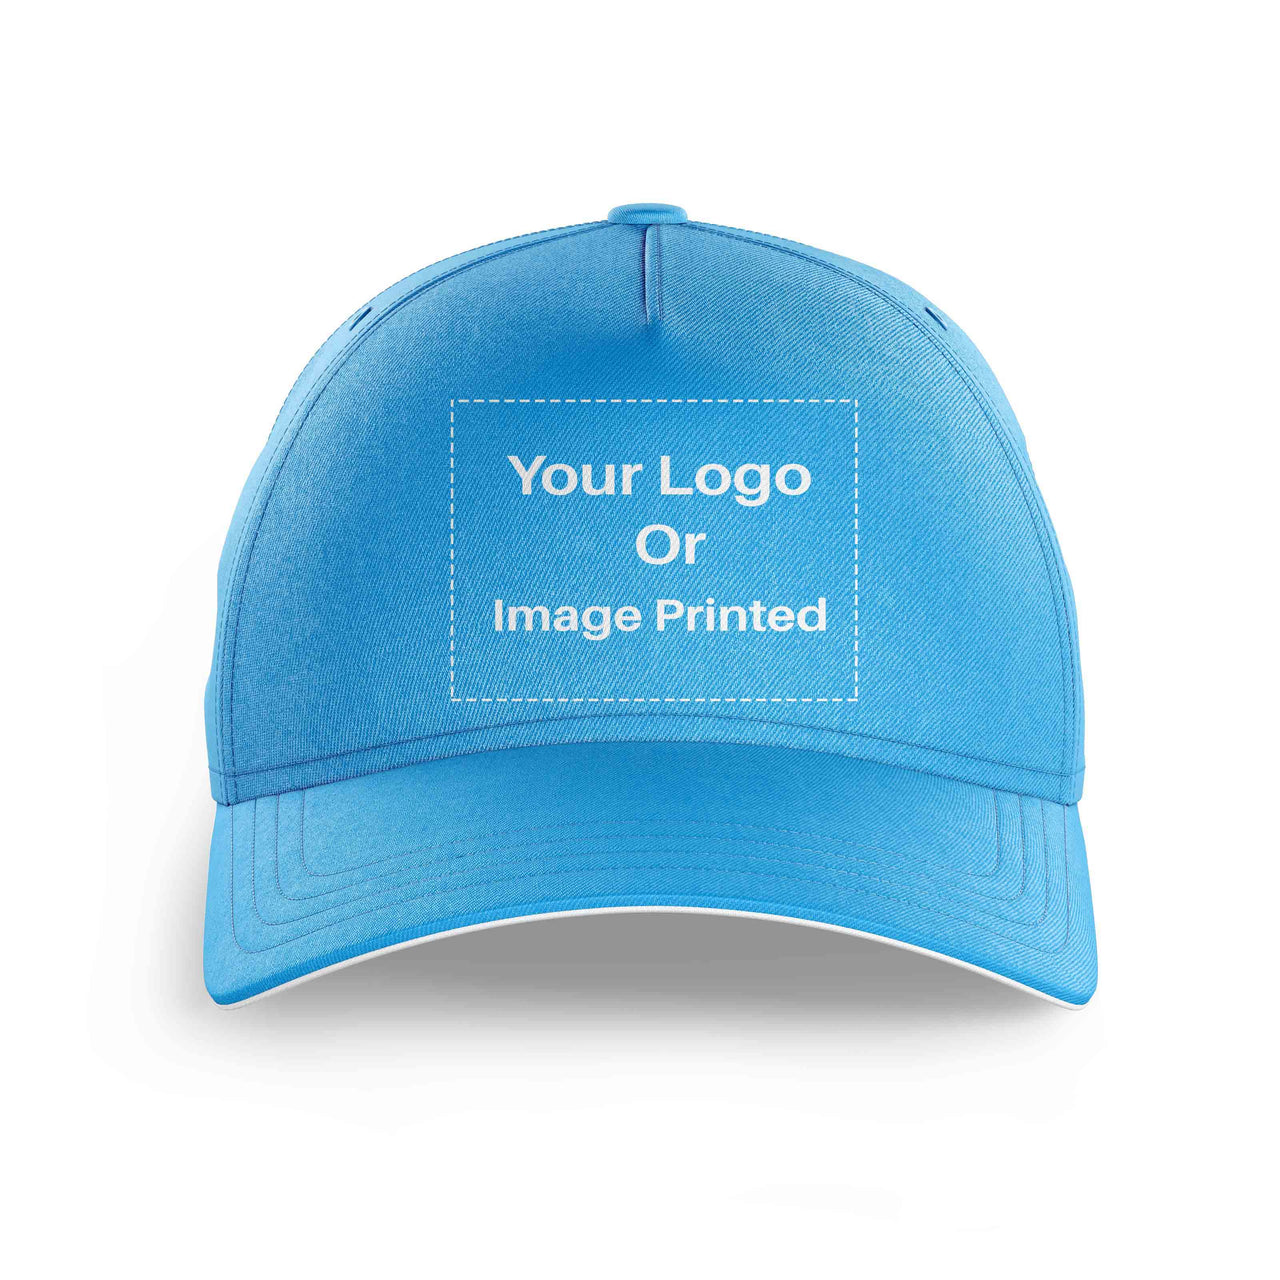 Your Custom Image & LOGO Printed Hats